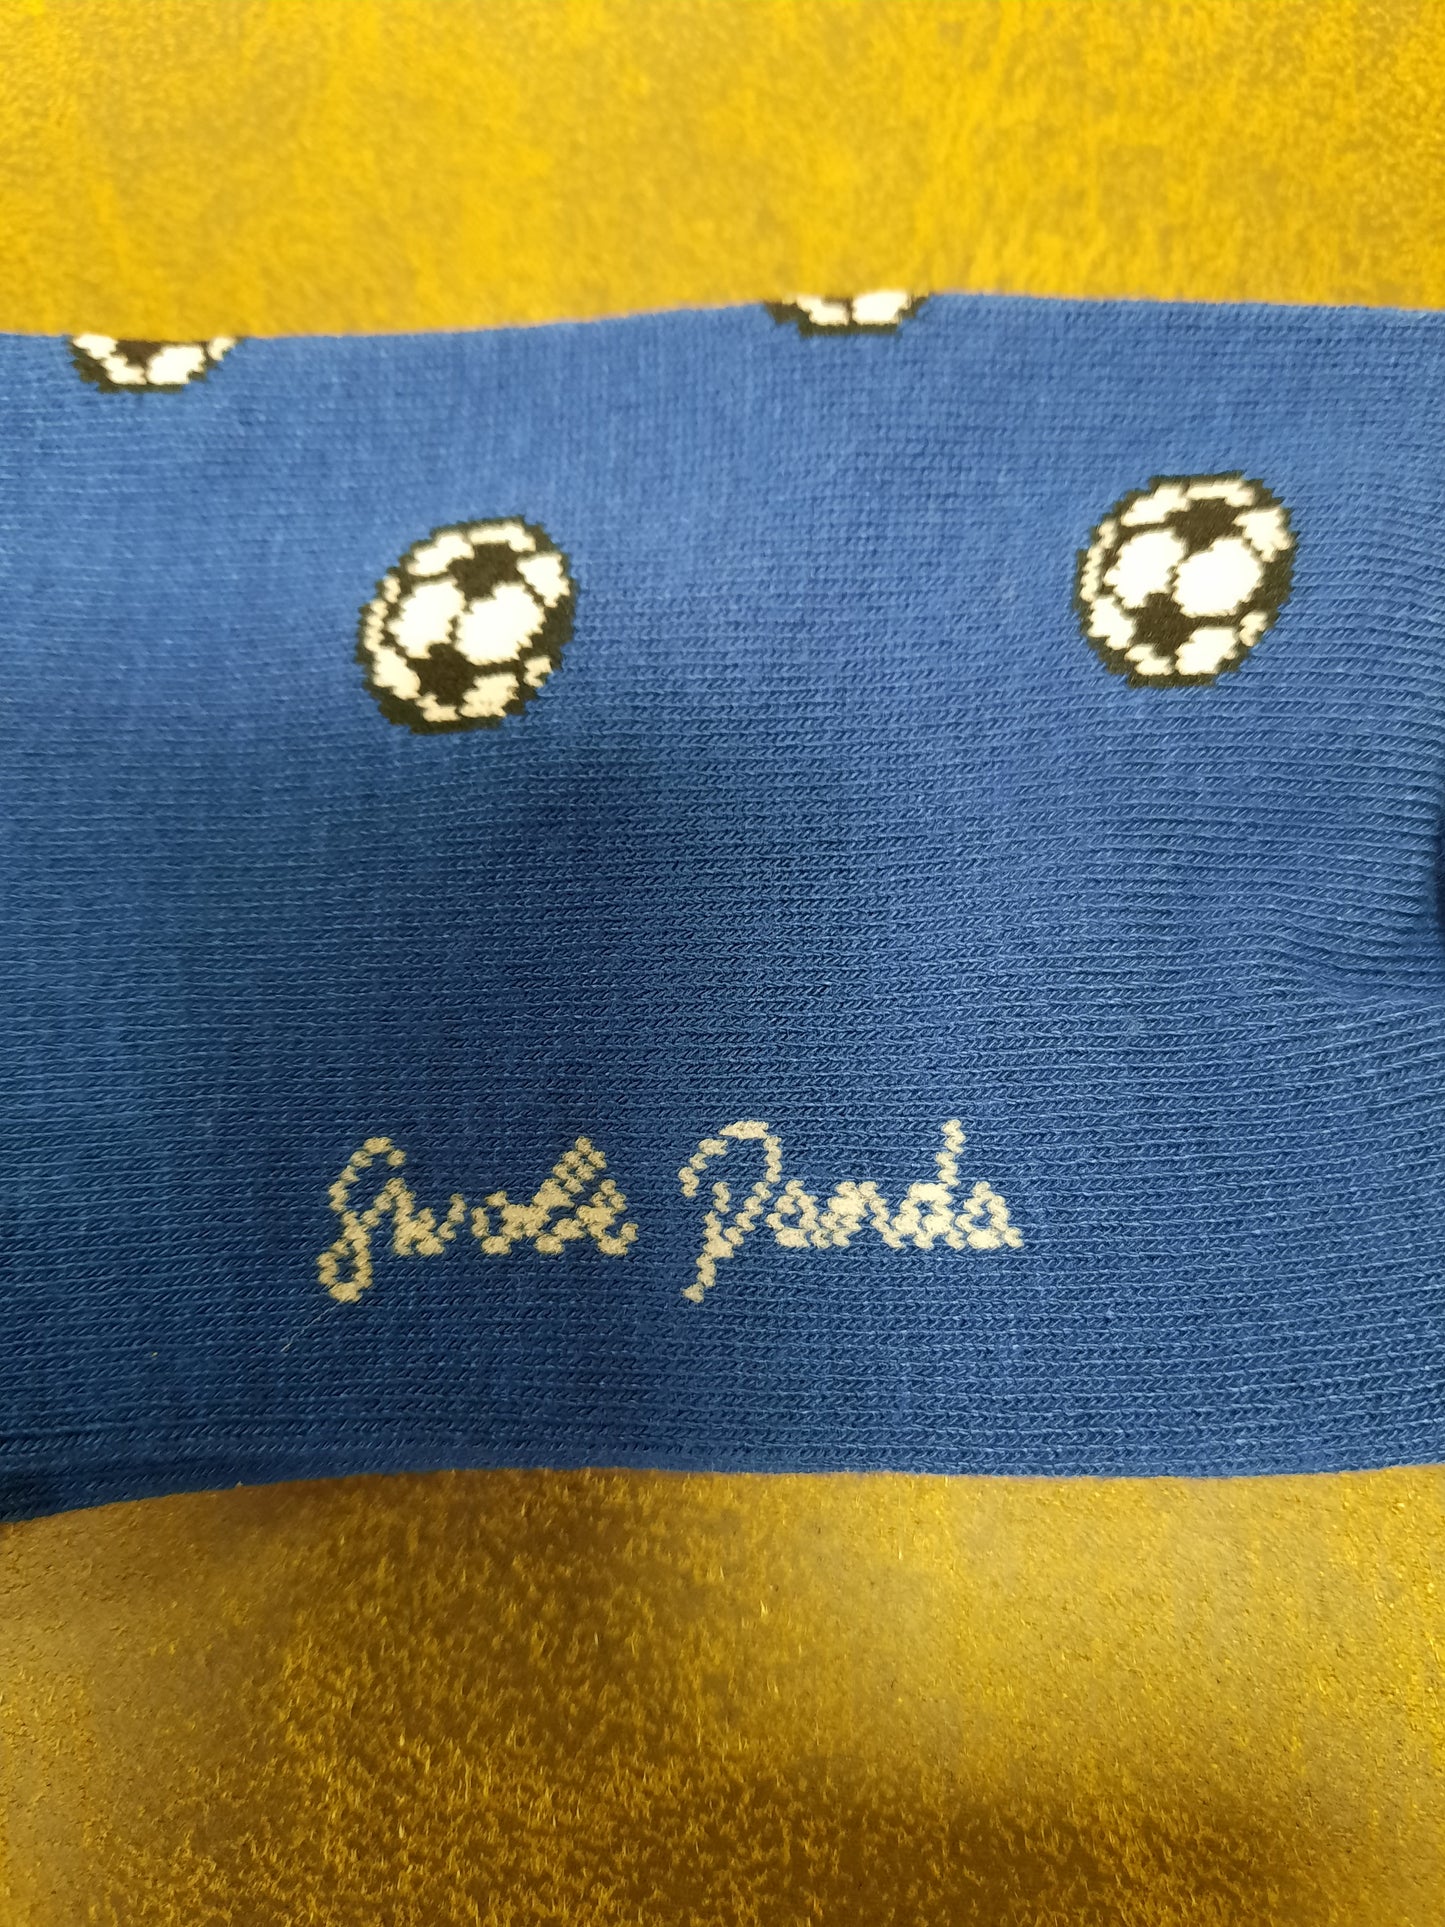 Football Socks by Swole Panda